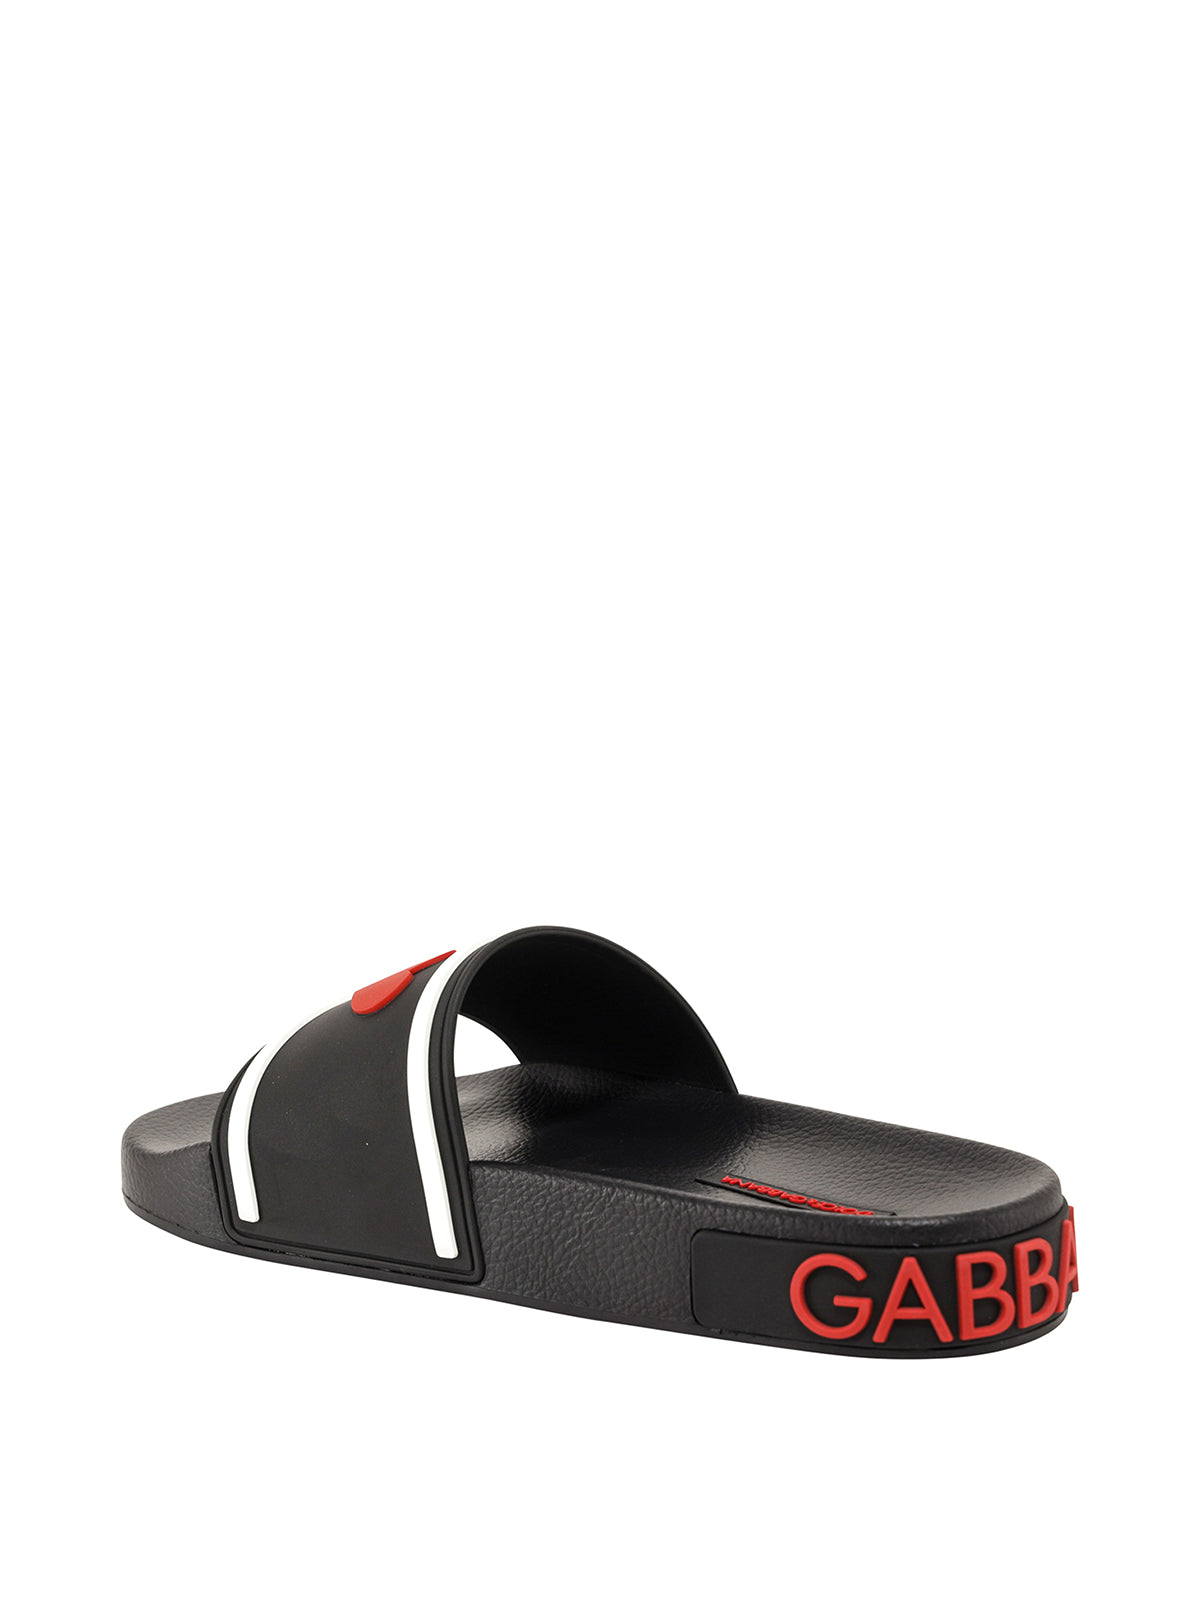 Dolce & Gabbana Black I ♡ Slides